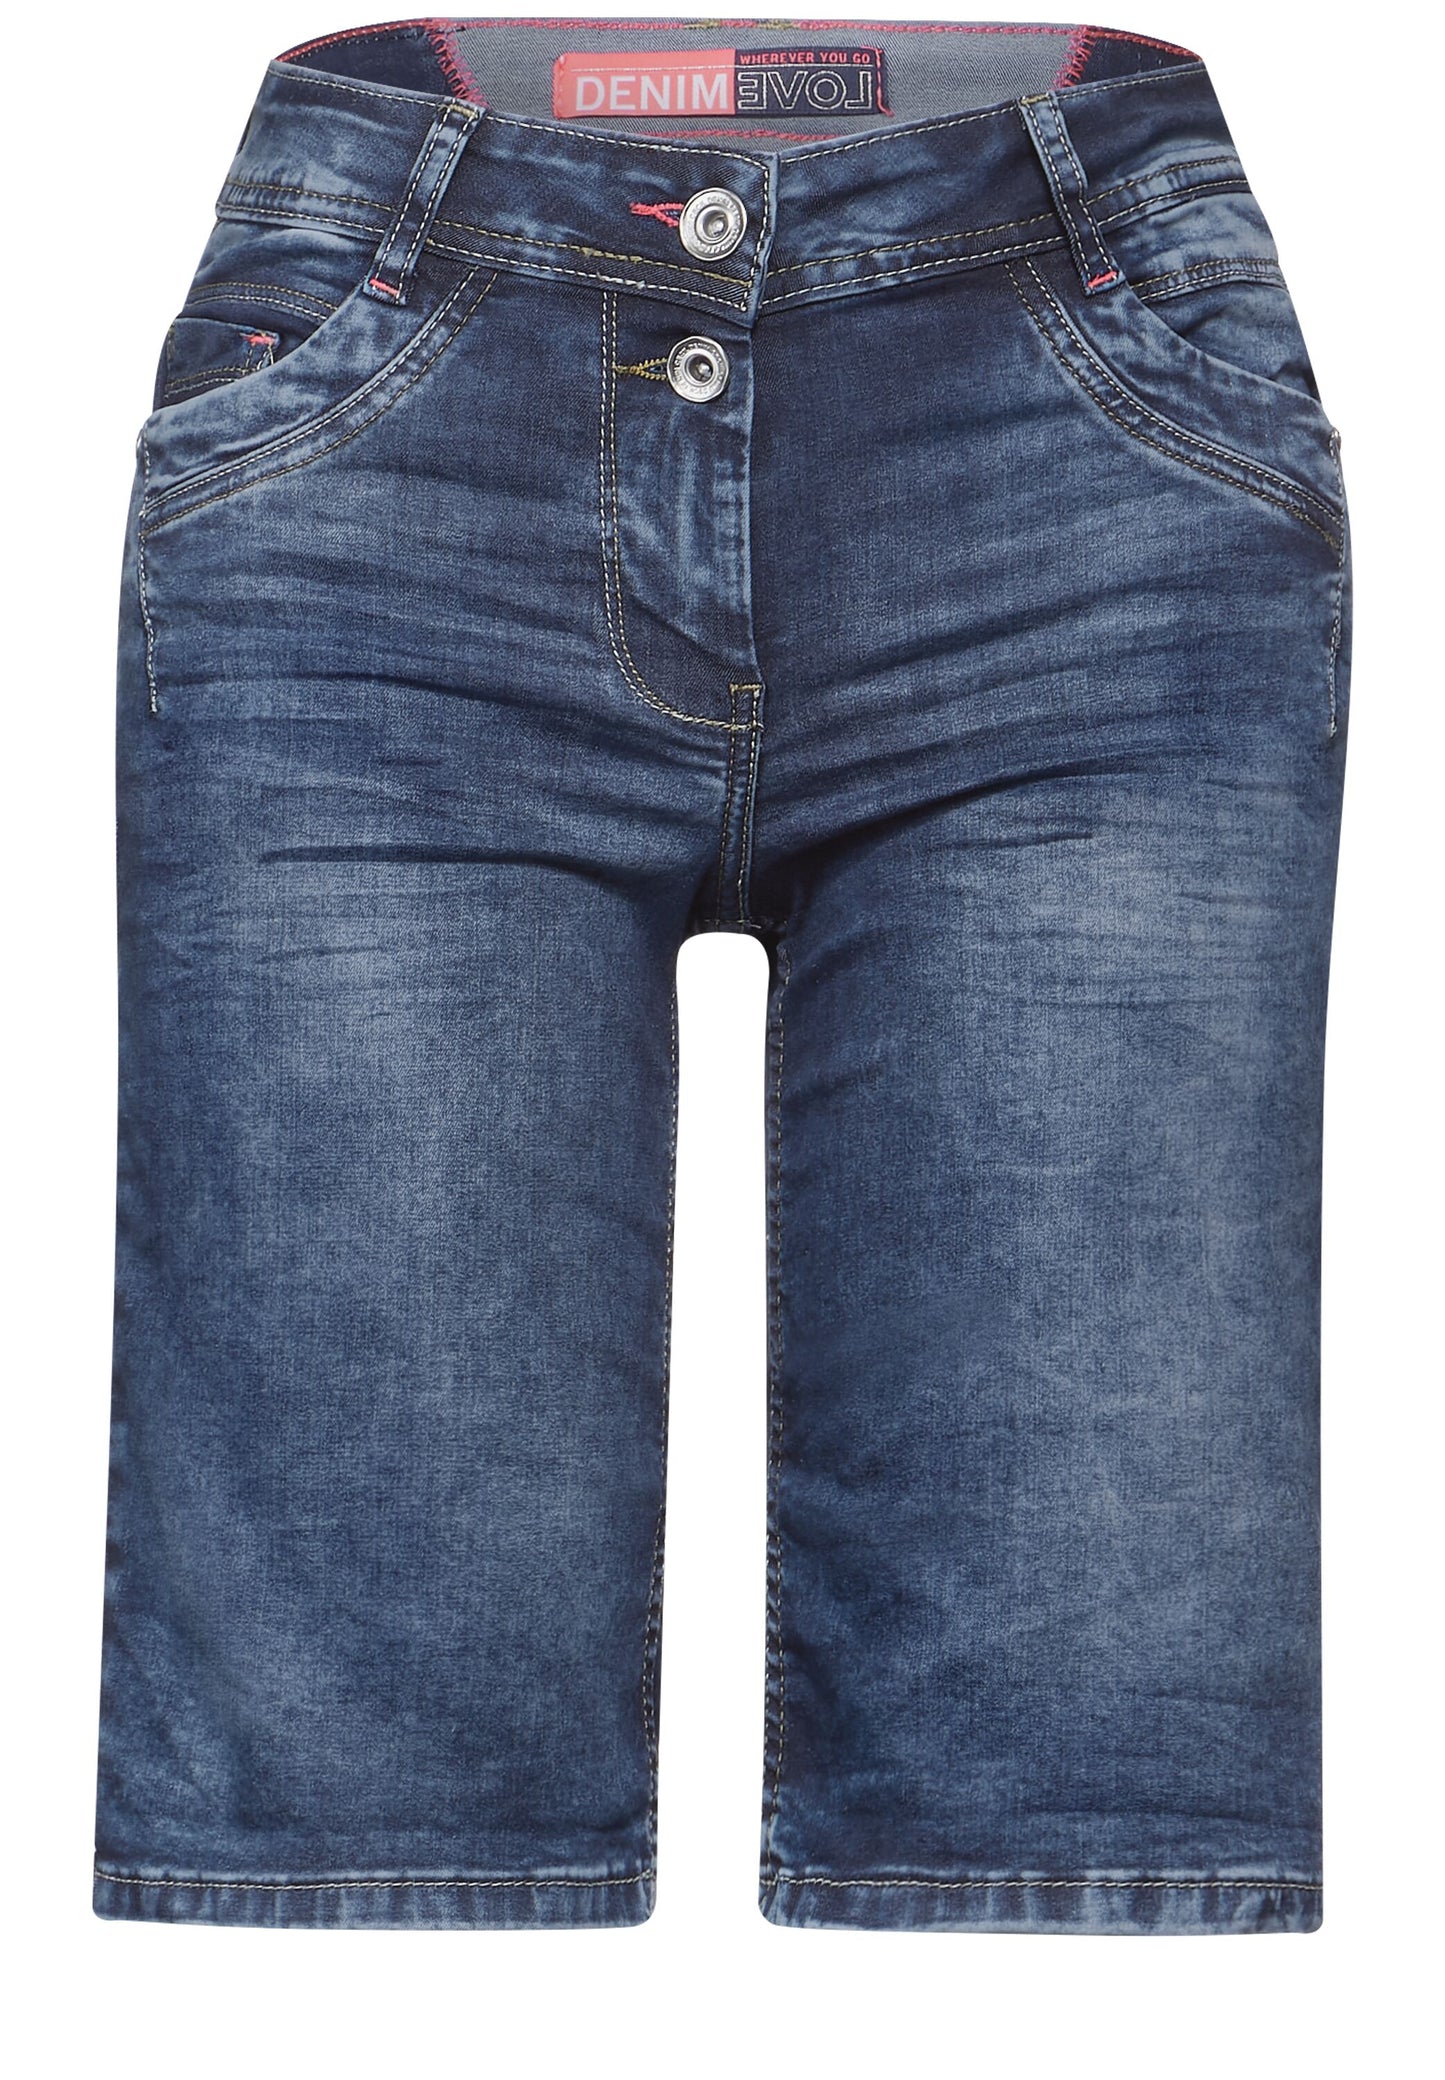 CECIL - Mittelblaue Jeans Shorts - Style Scarlett